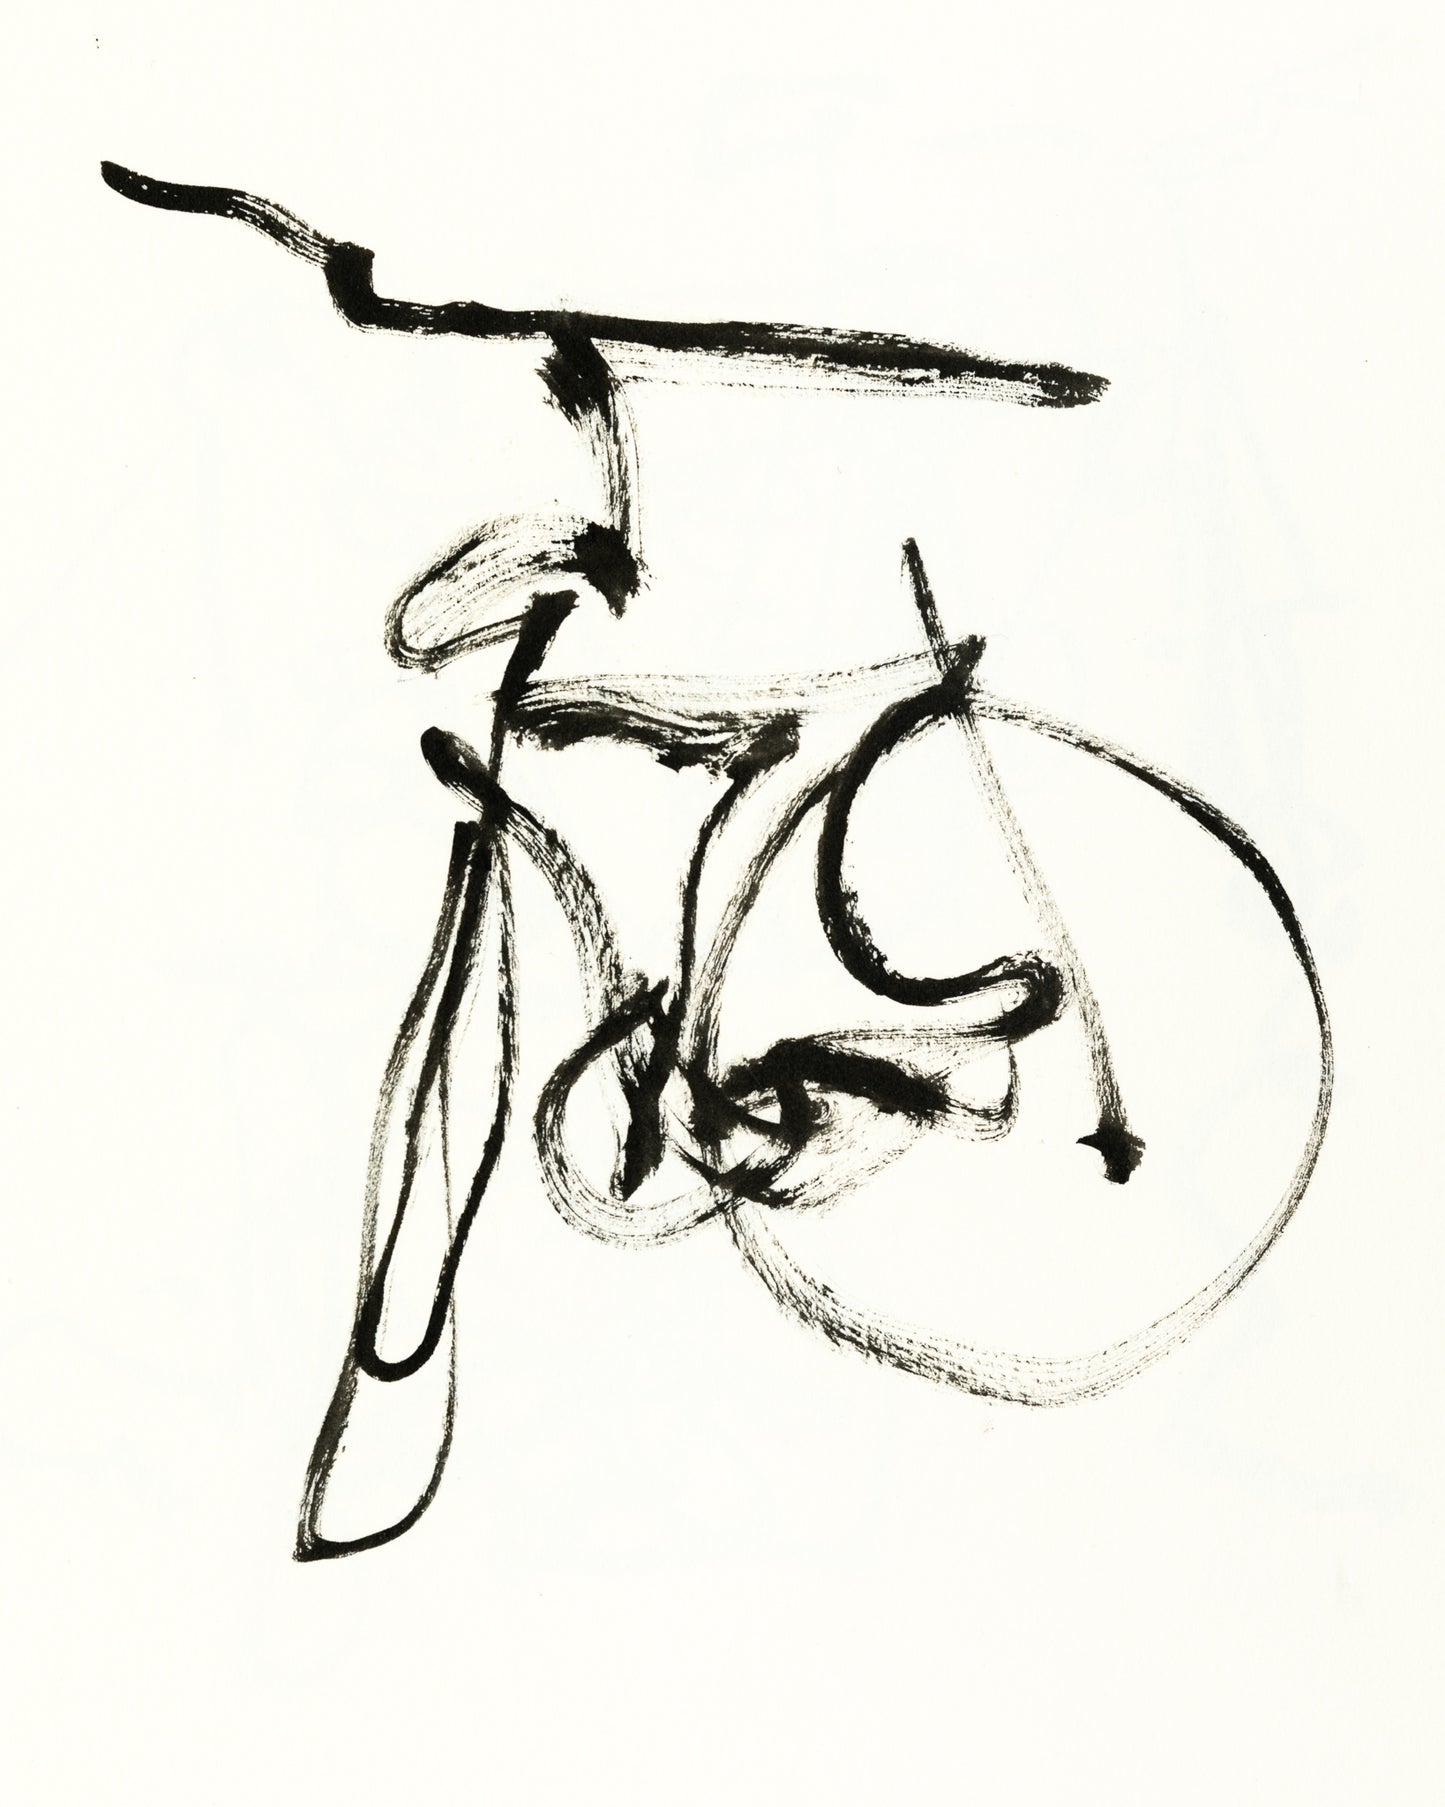 Bicycle Sketch 1 - Prospect Park